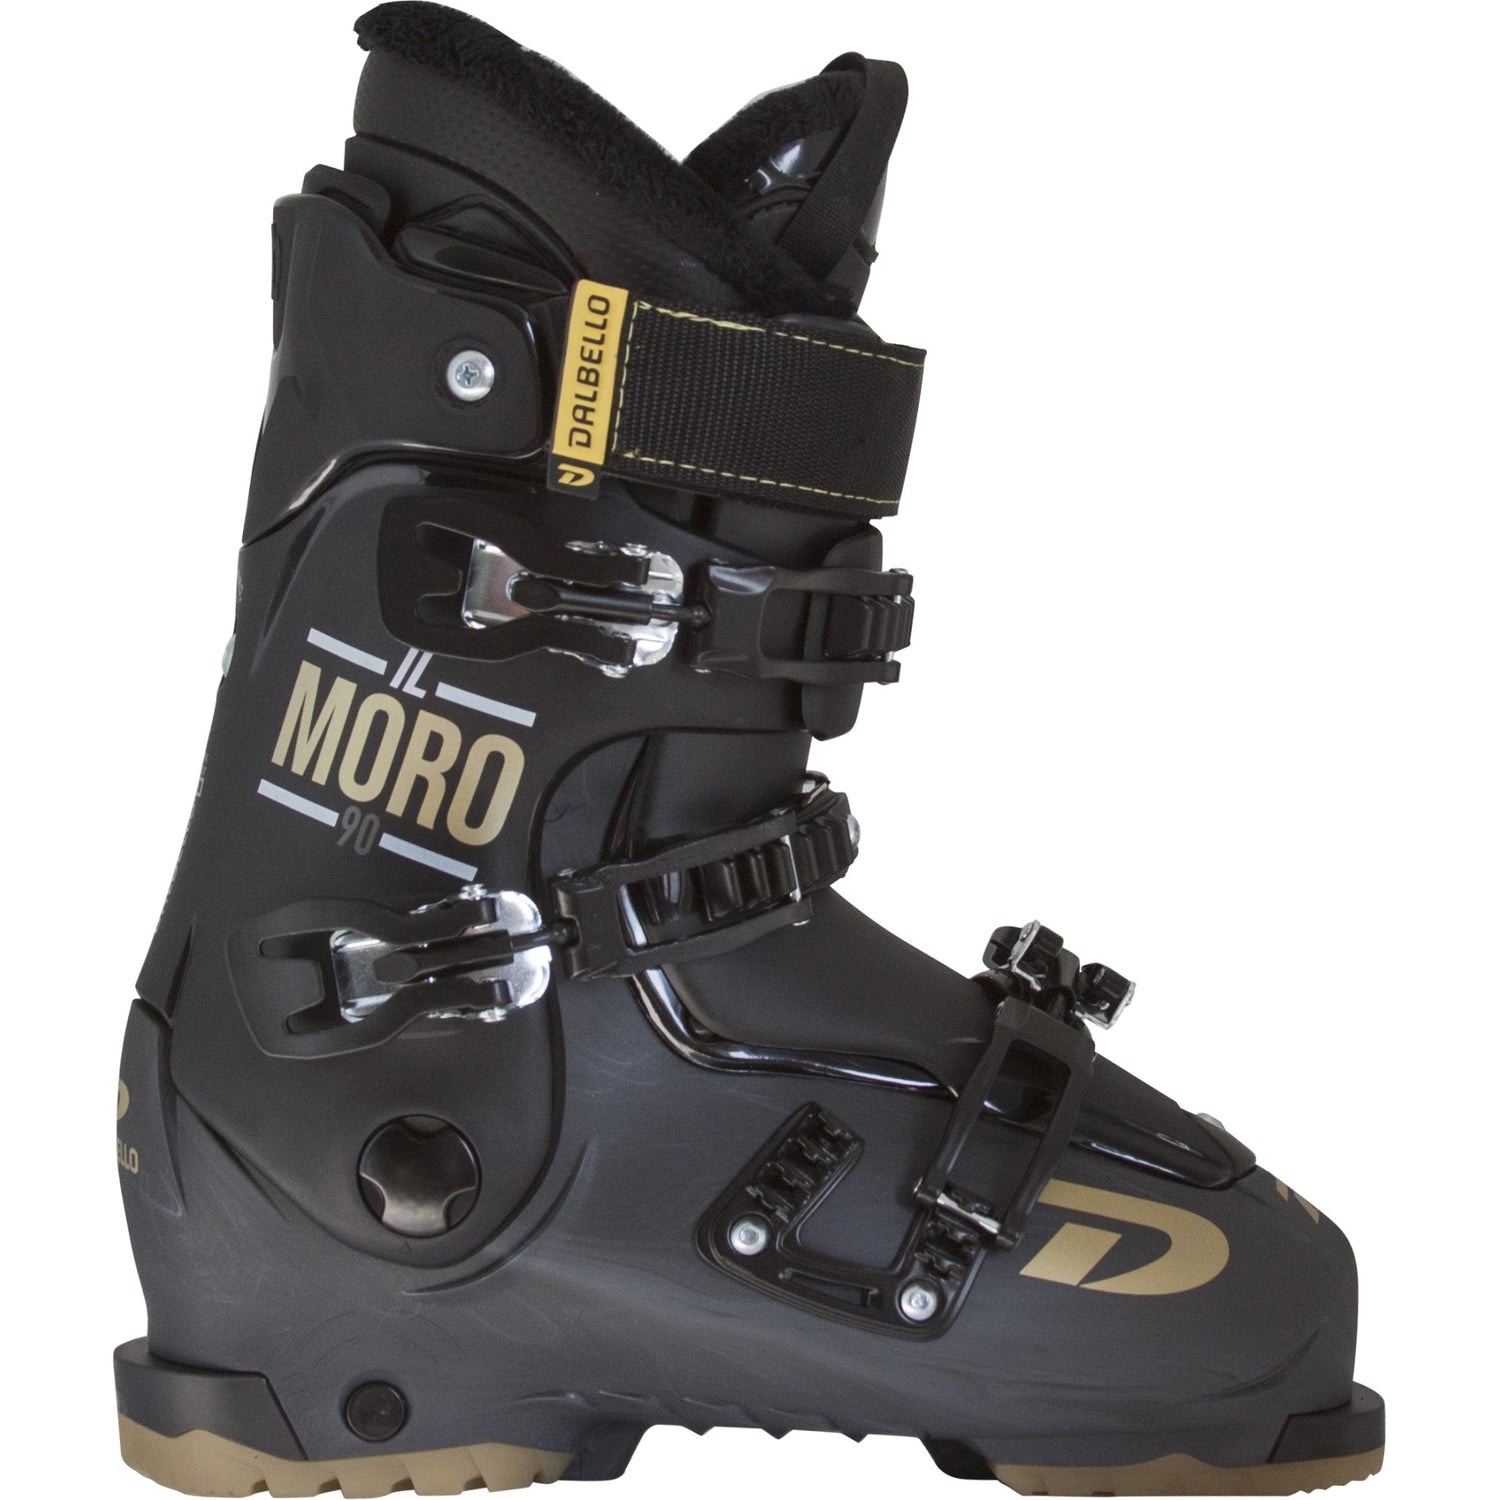 Bottes de Ski Il Moro MX 90 Homme